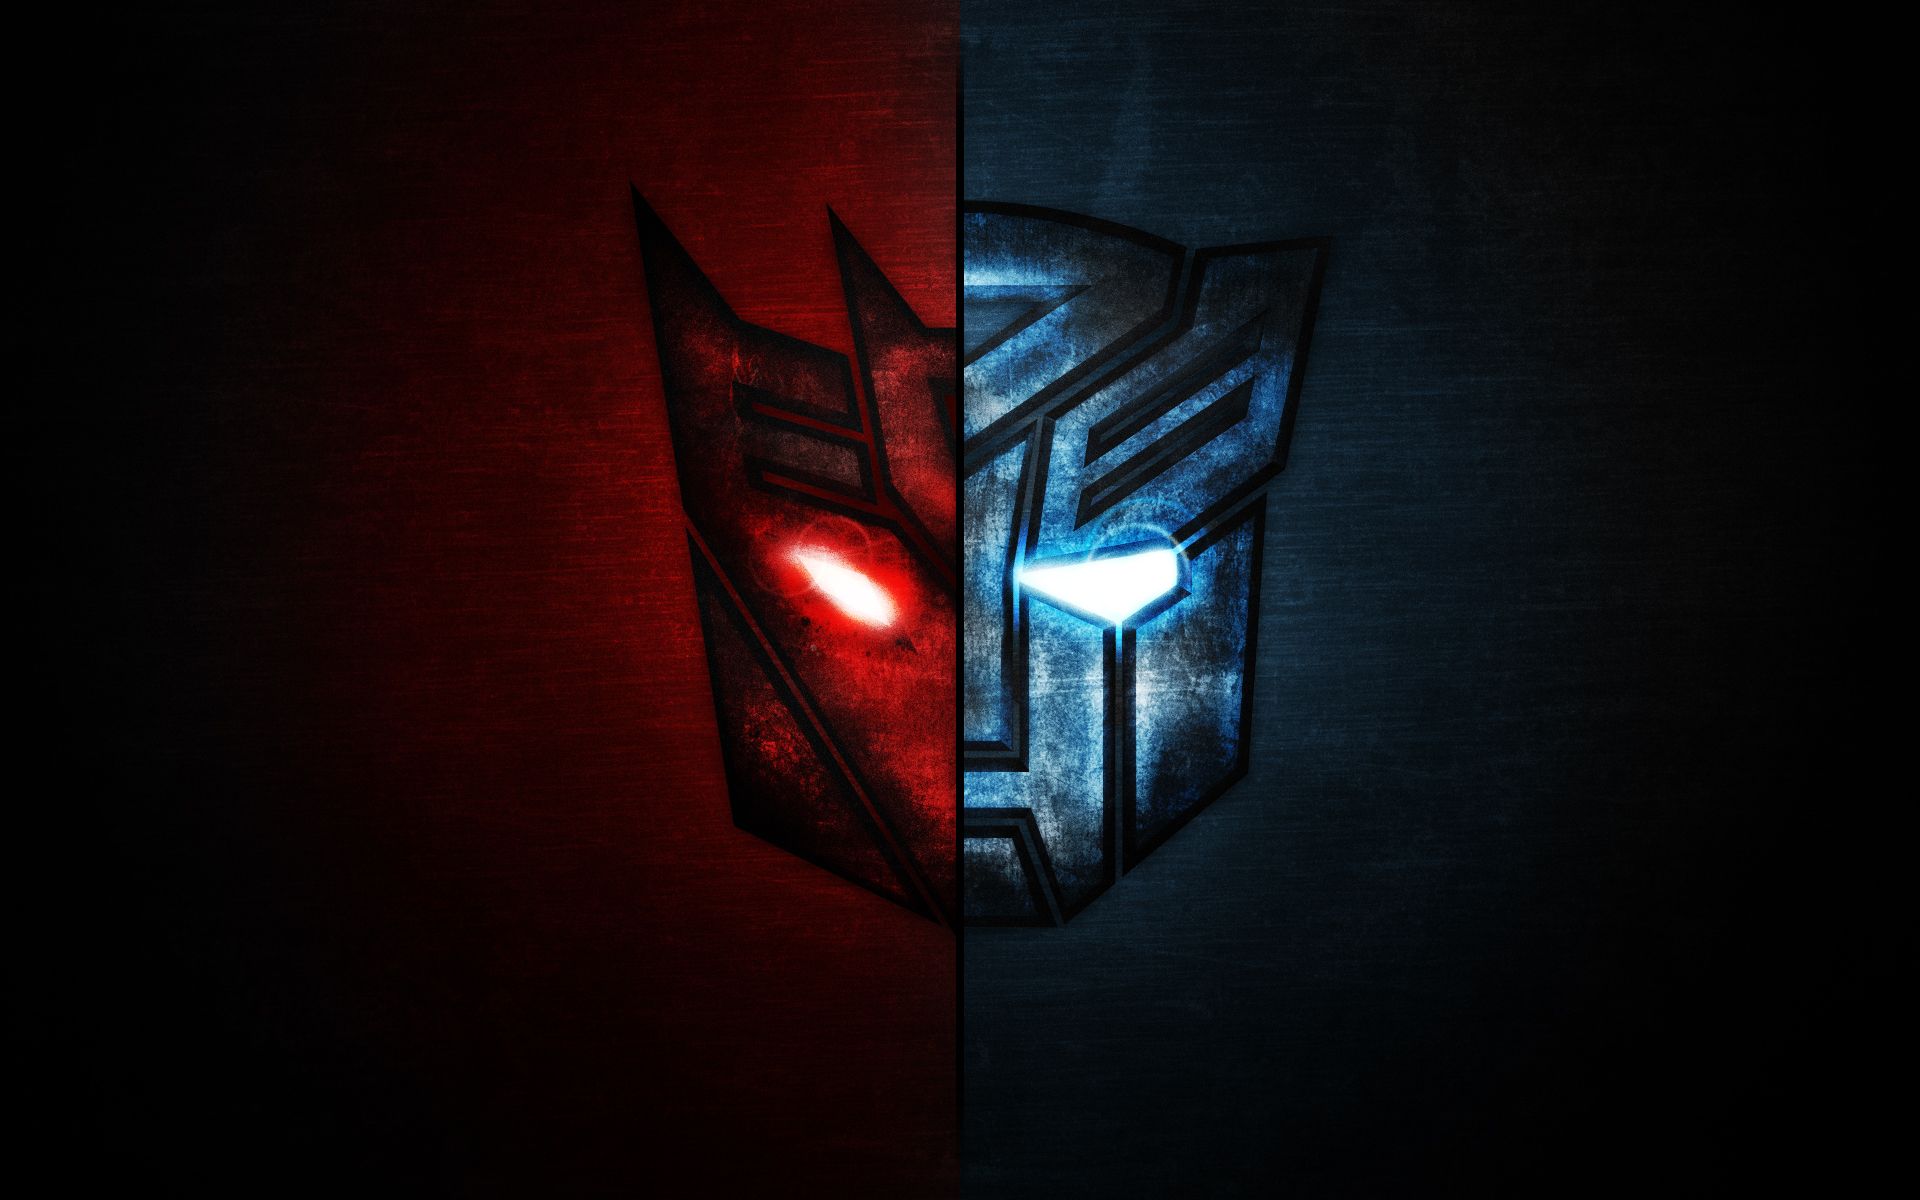 Transformers Desktop Wallpaper